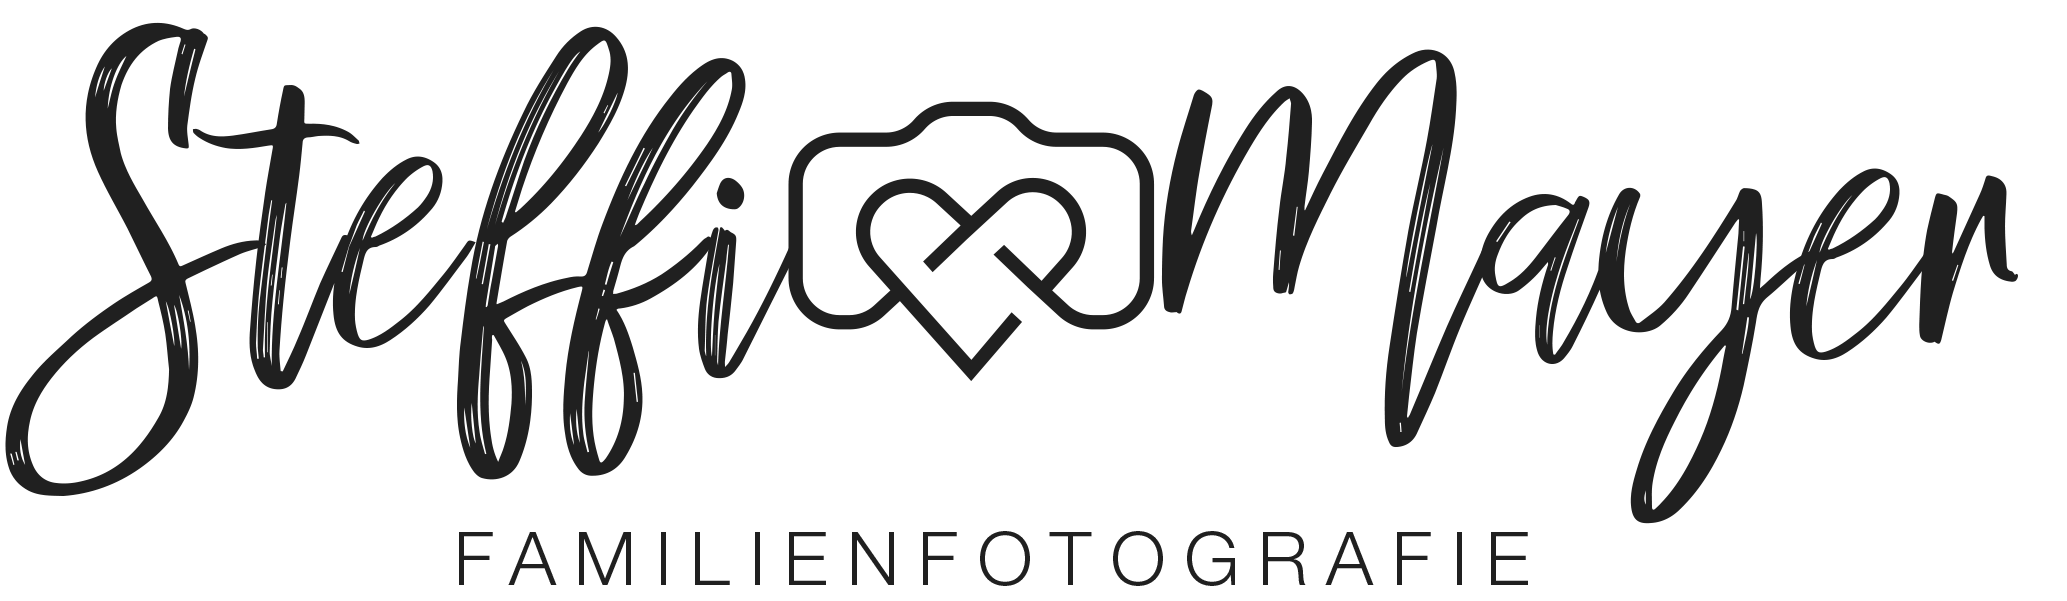 Steffi Mayer Familienfotografie Logo schwarz